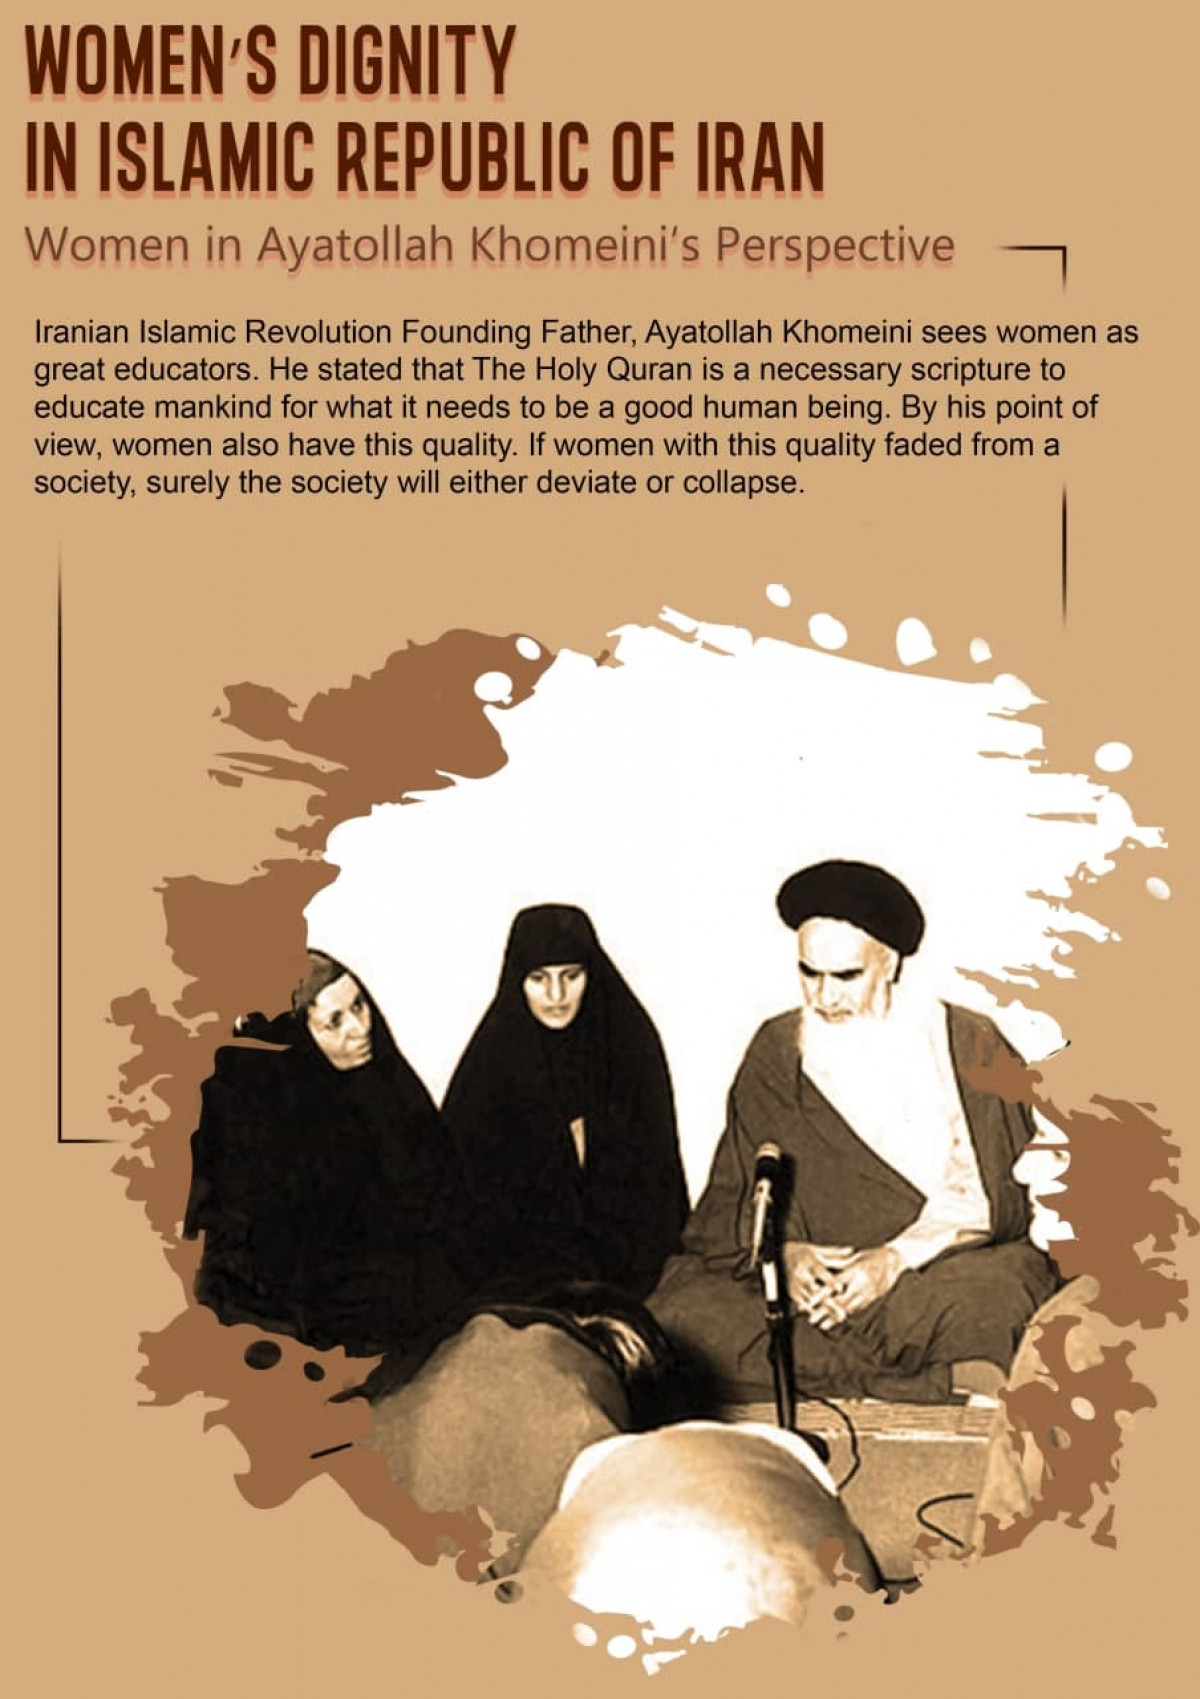 WOMEN'S DIGNITY IN ISLAMIC REPUBLIC OF IRAN in Ayatollah Khomeini's Perspective